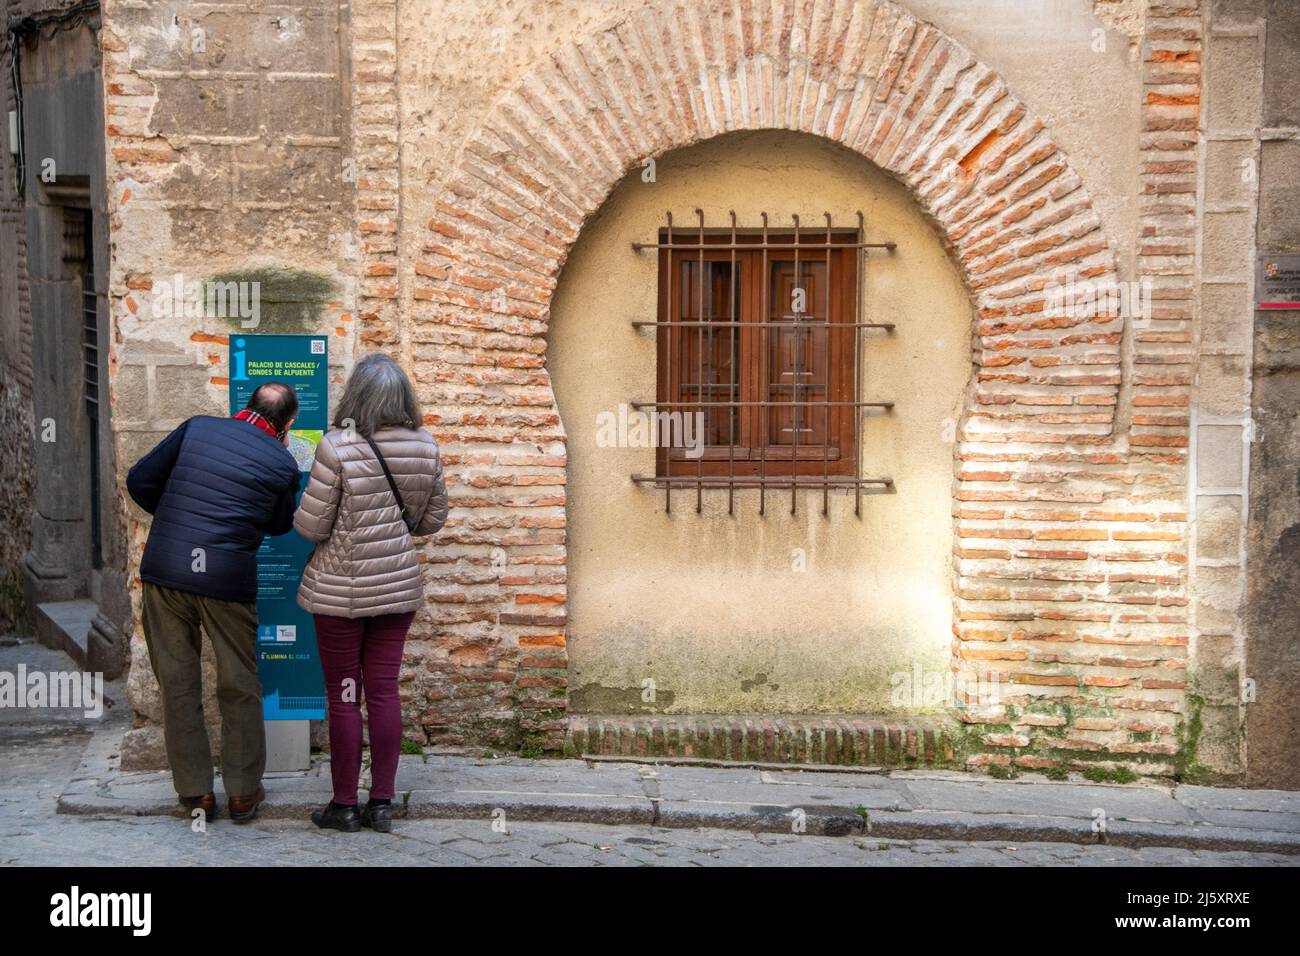 Touristes regardant un guide carte Segovia, Espagne Banque D'Images